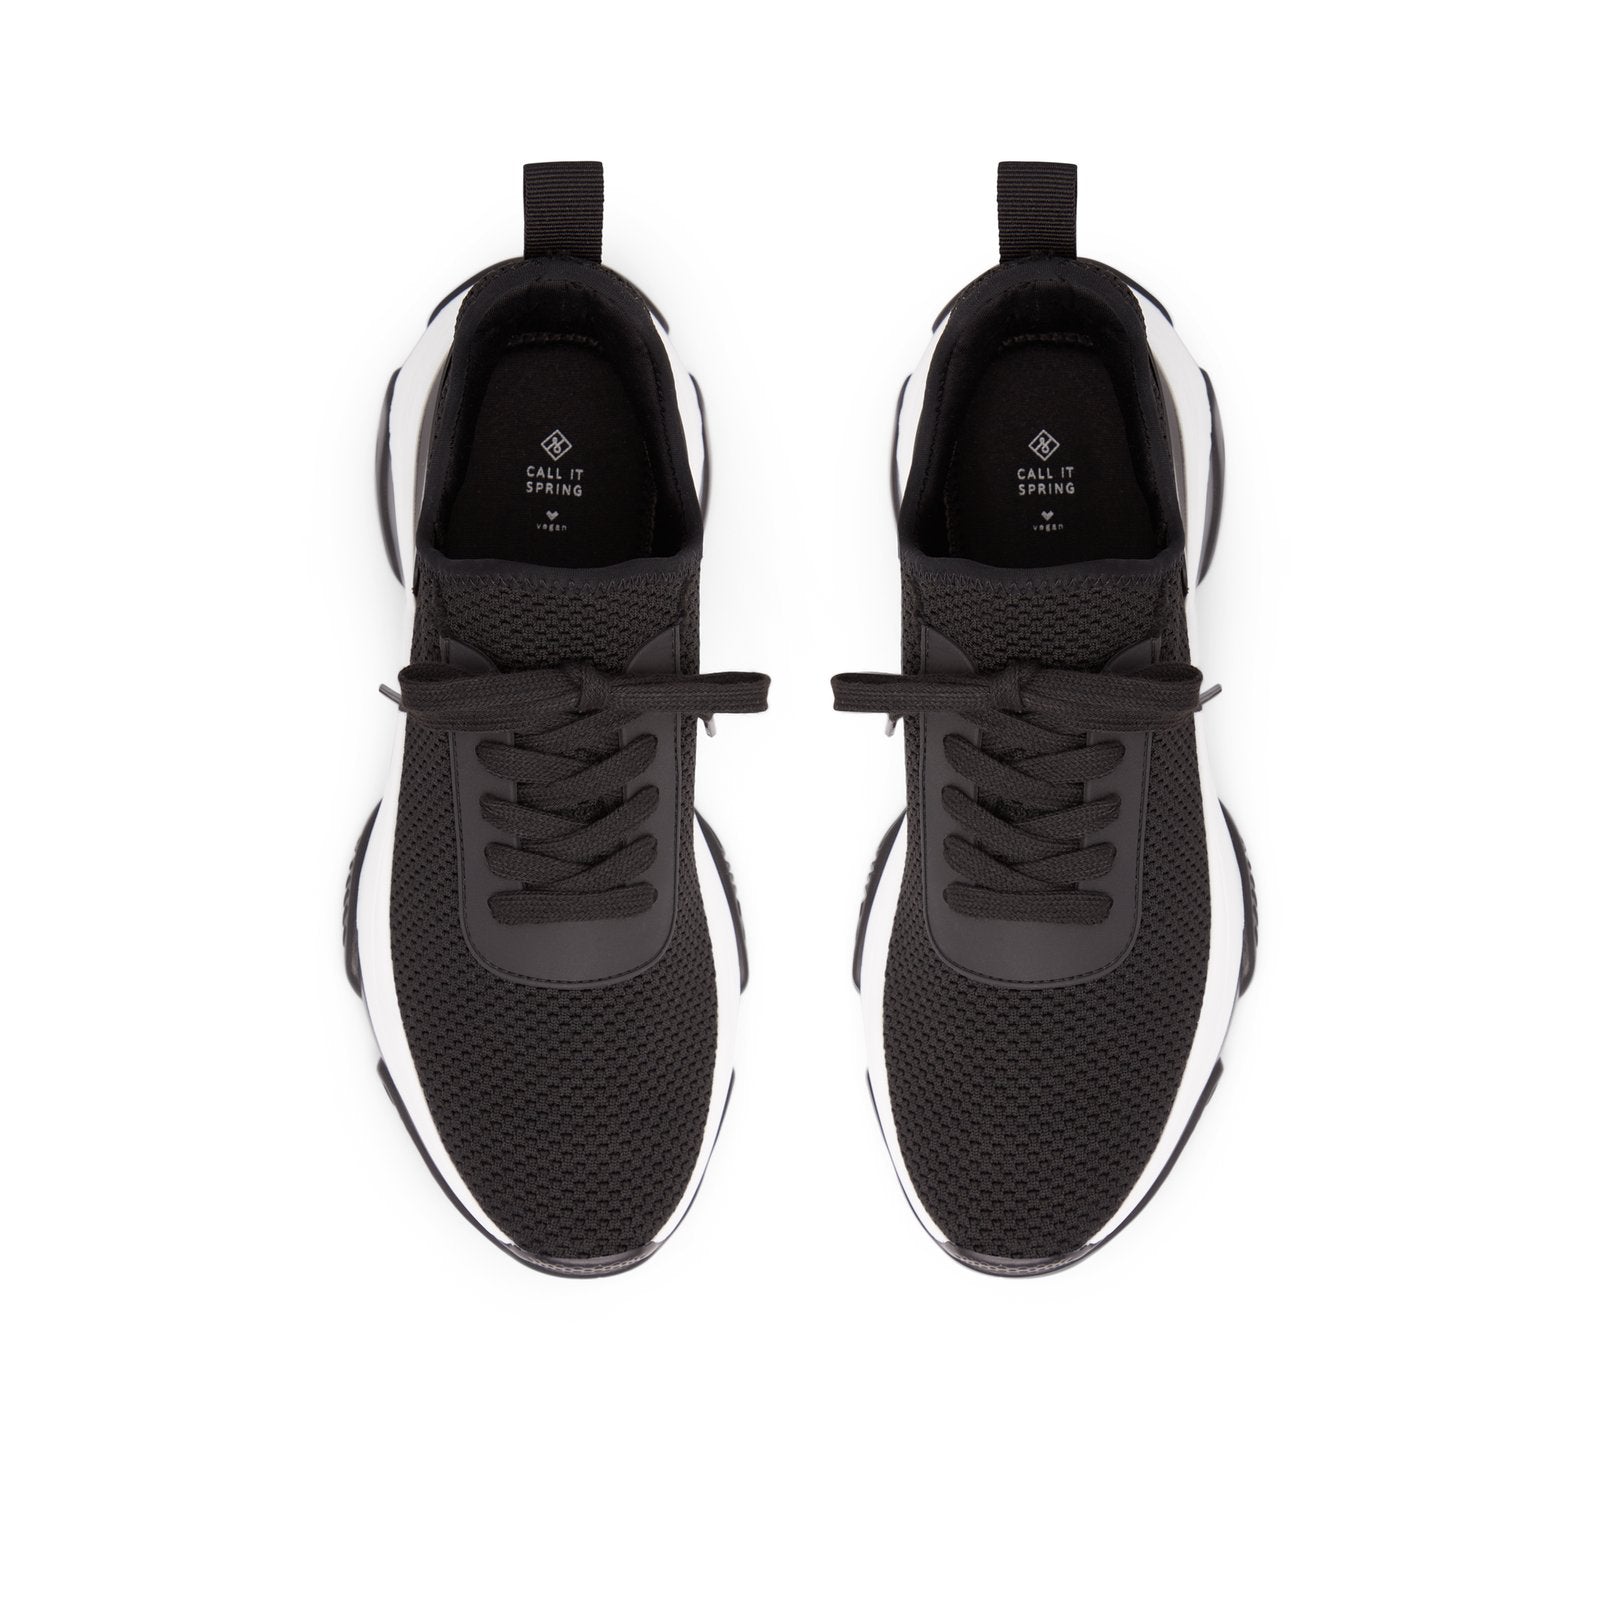 Lexx Men Shoes - Black - CALL IT SPRING KSA